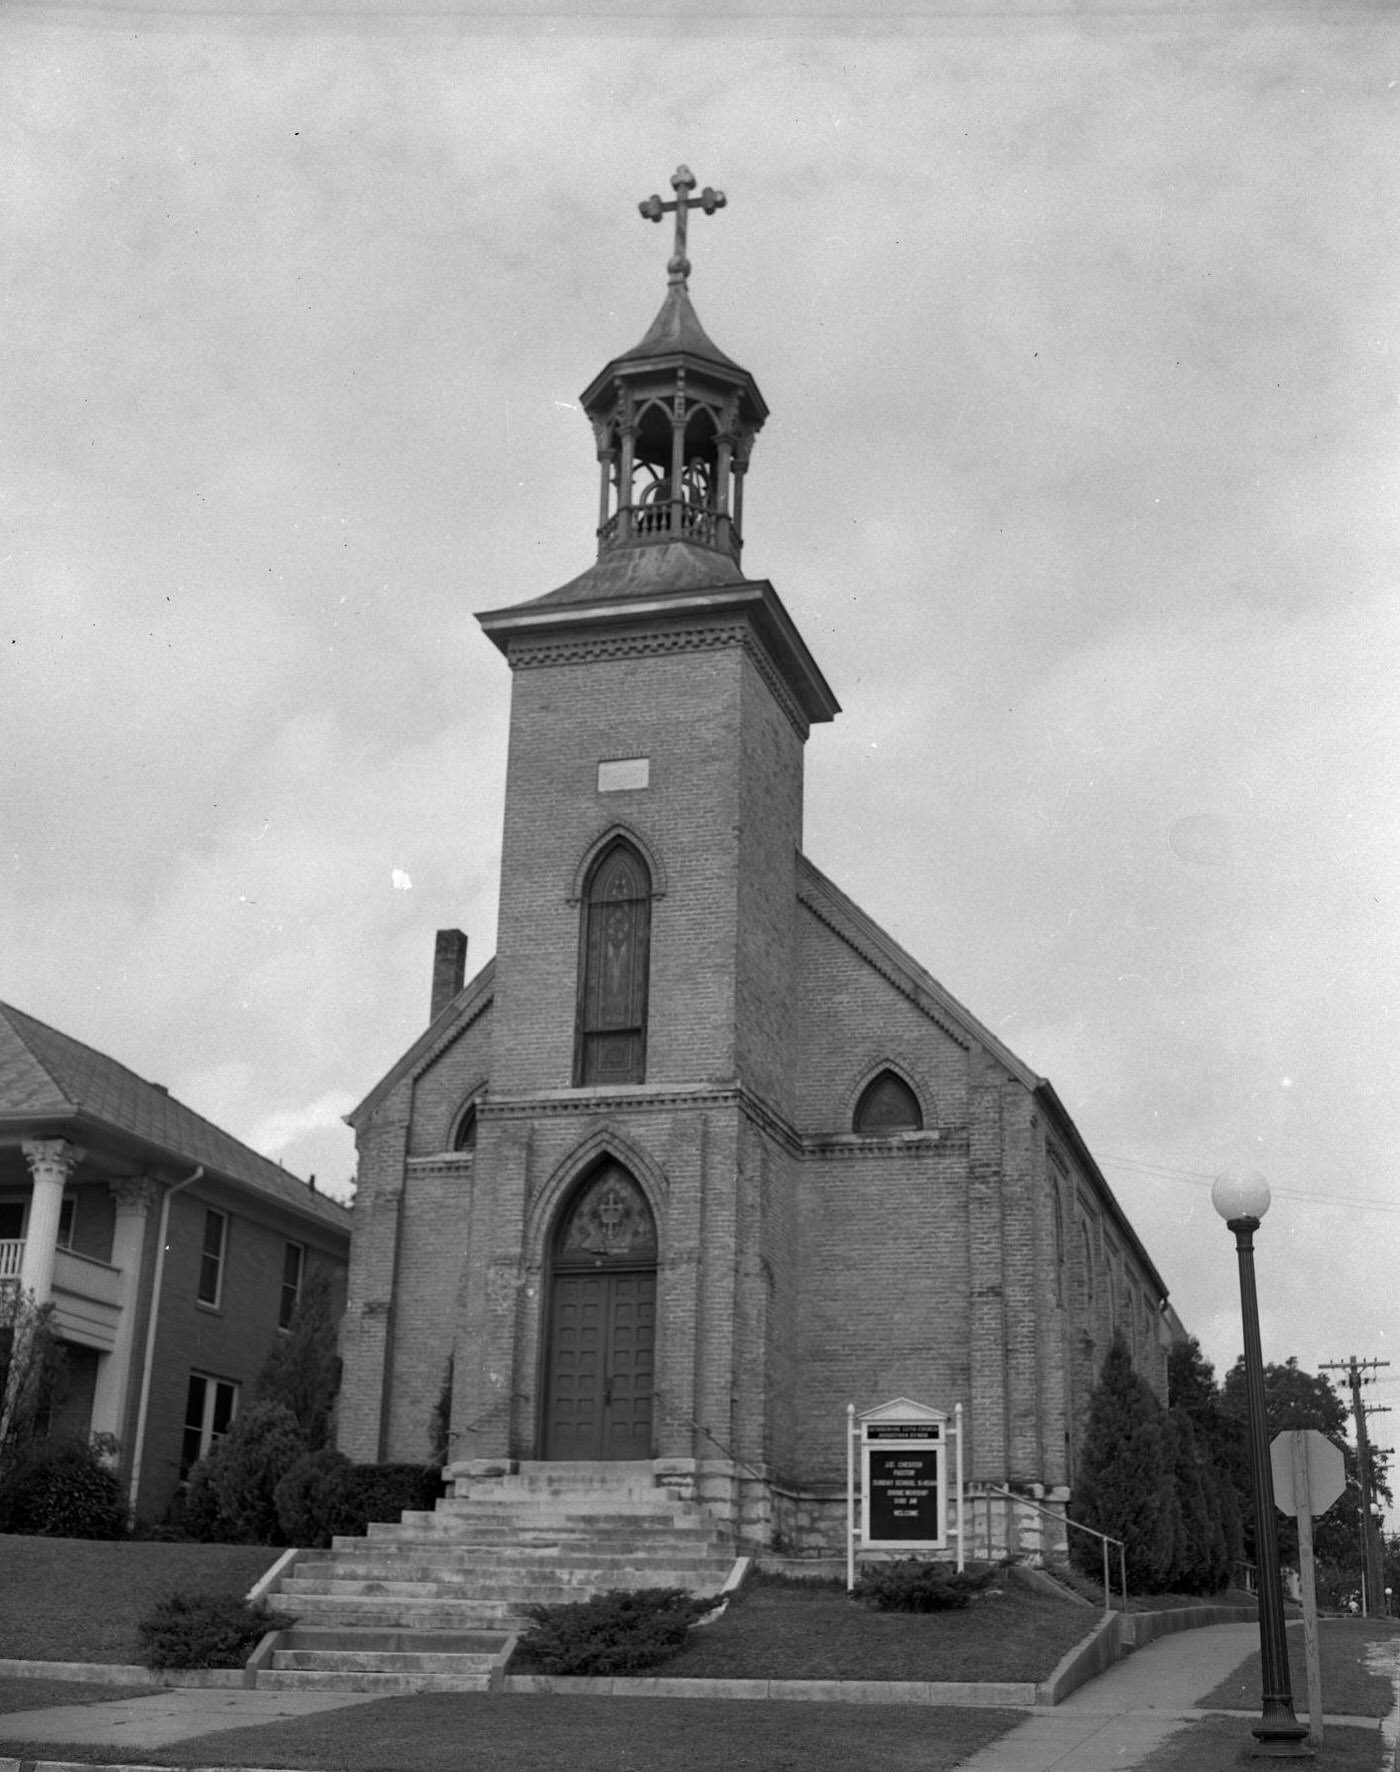 Gethsemane Lutheran Church on Congress Avenue, 1950